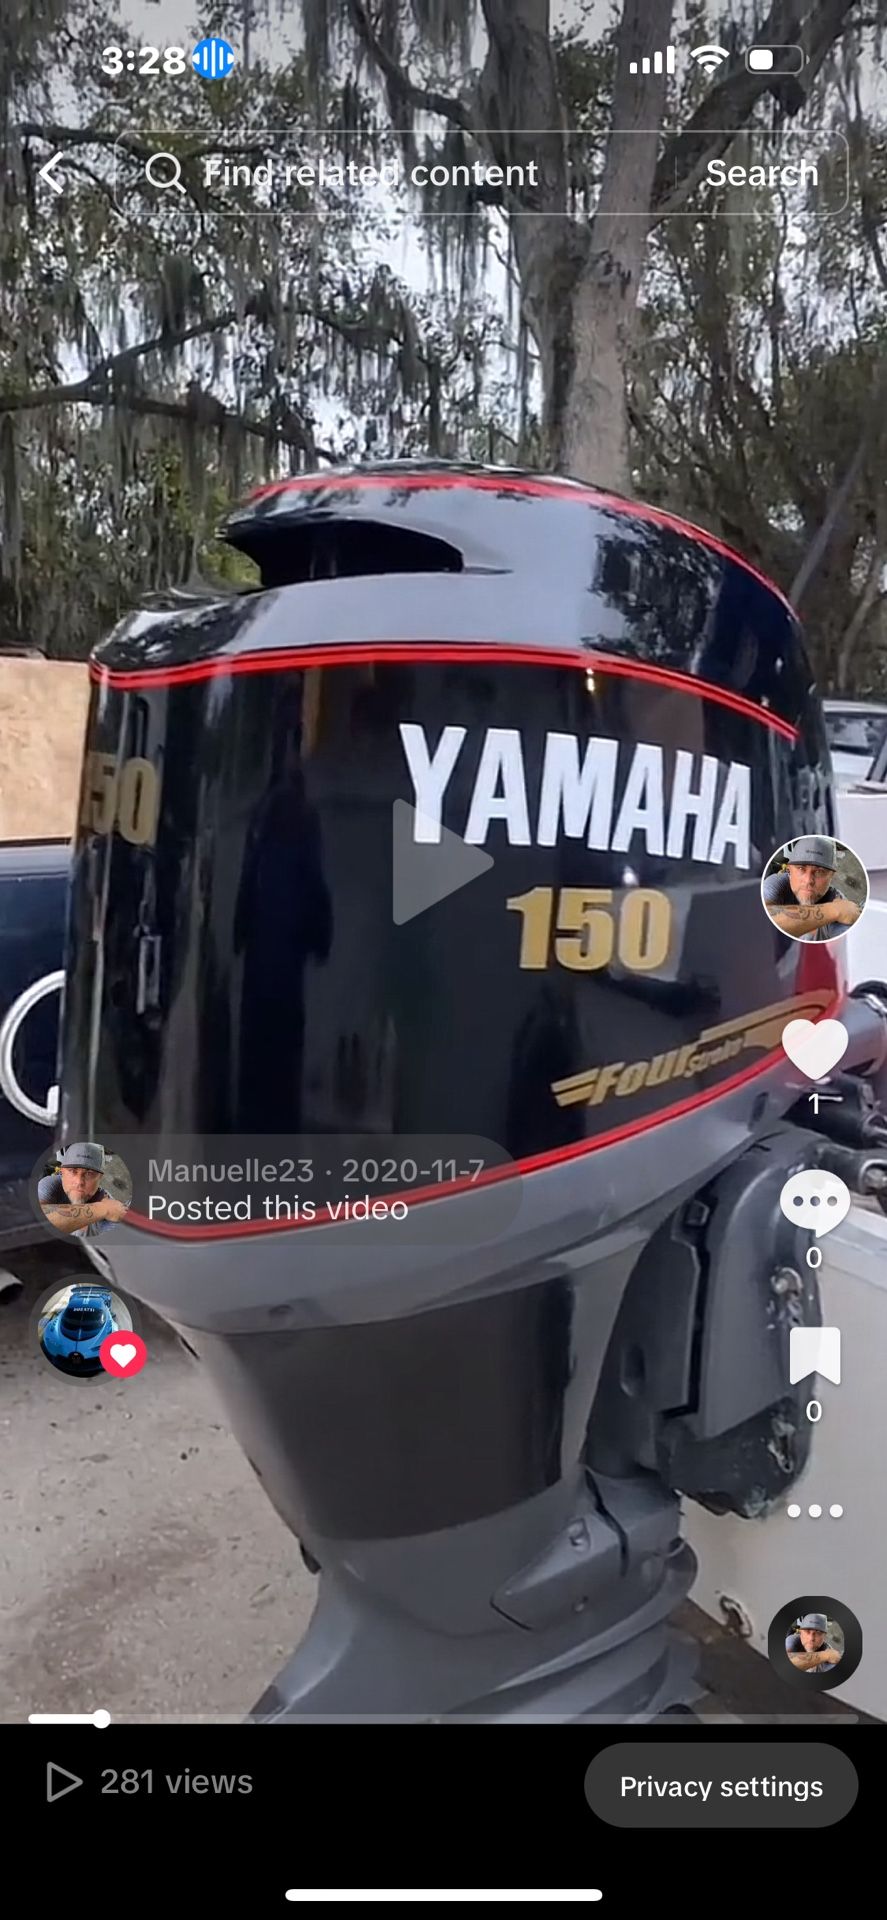 yamaha foutstroke 150